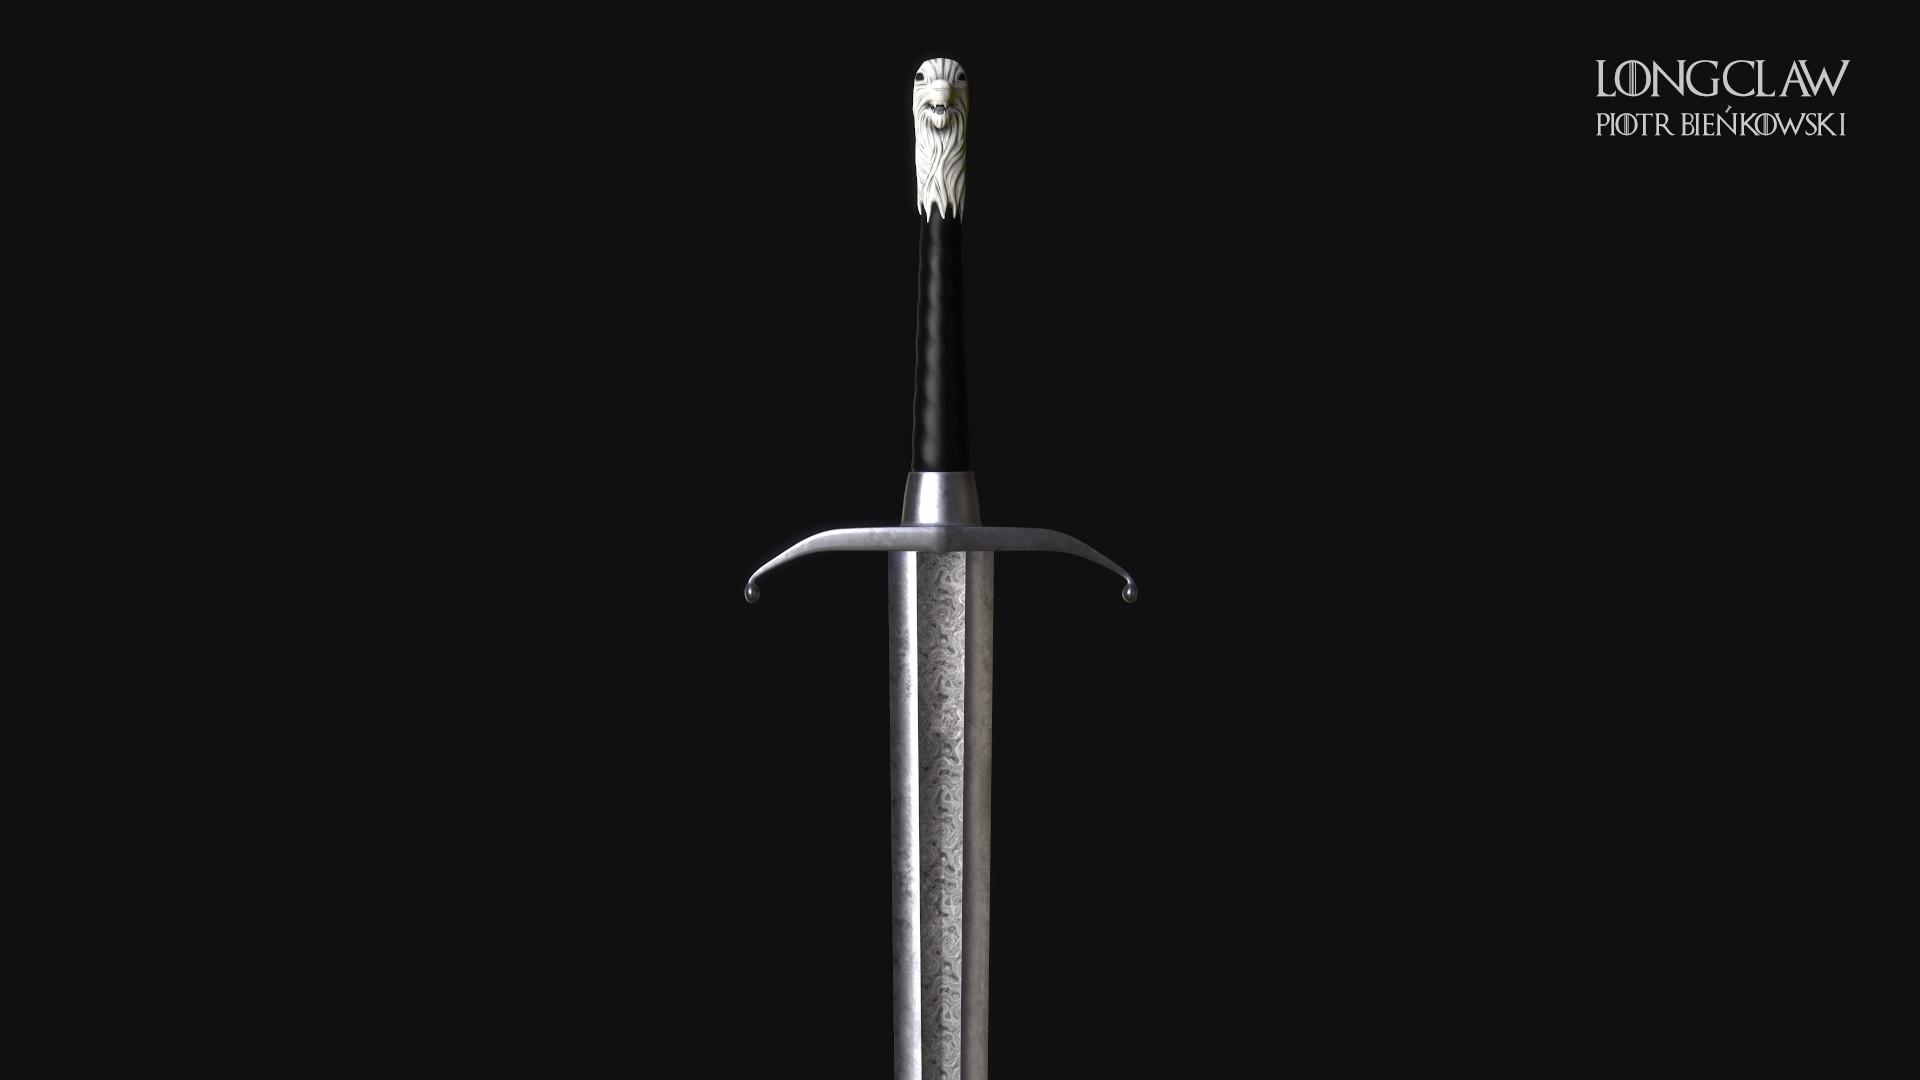 Game of Thrones Swords Wallpapers - Top Free Game of Thrones Swords ...